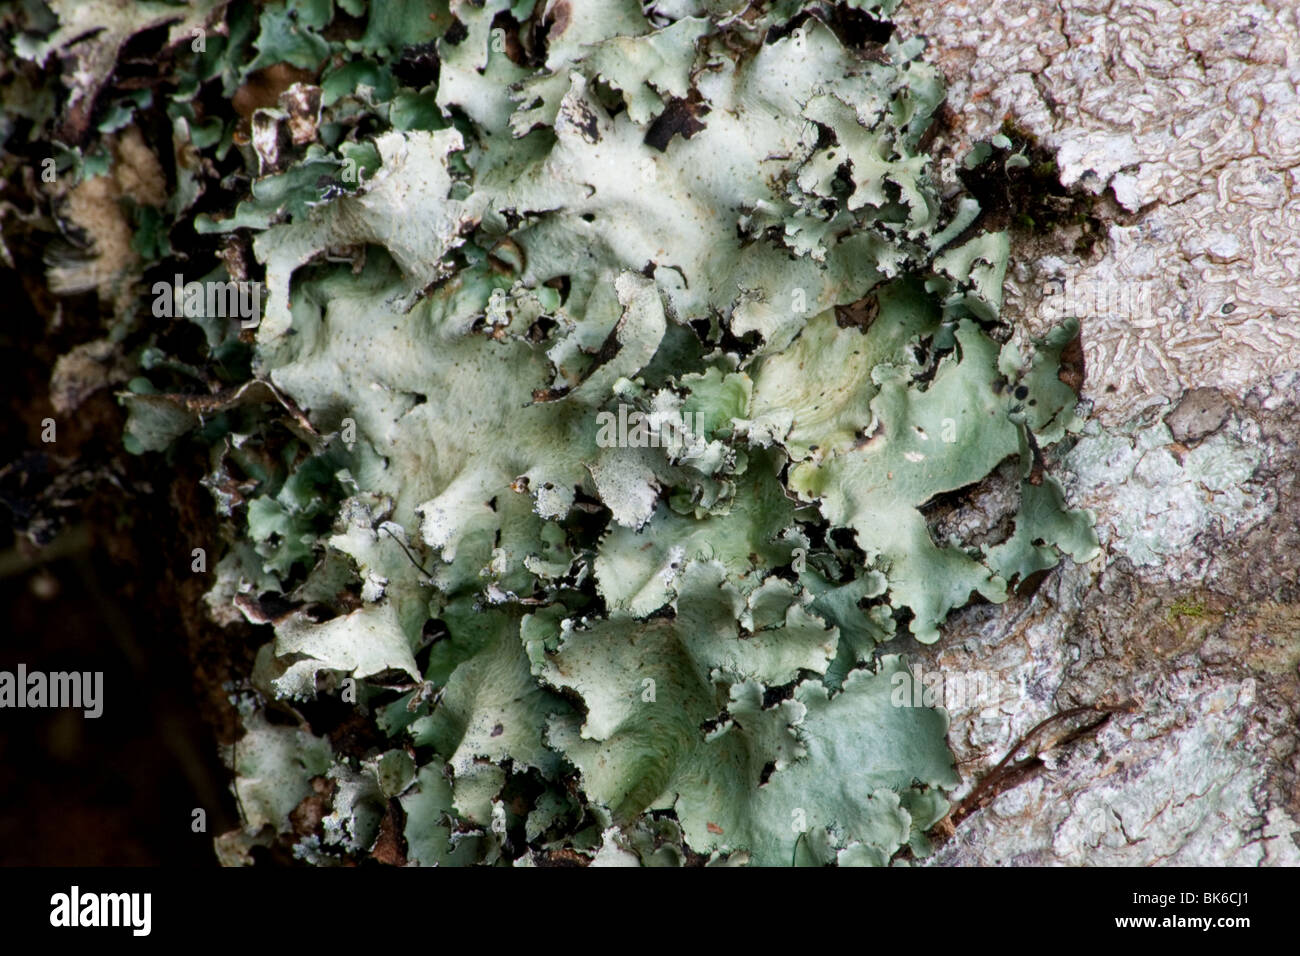 Foliose lichens on tree trunk Stock Photo